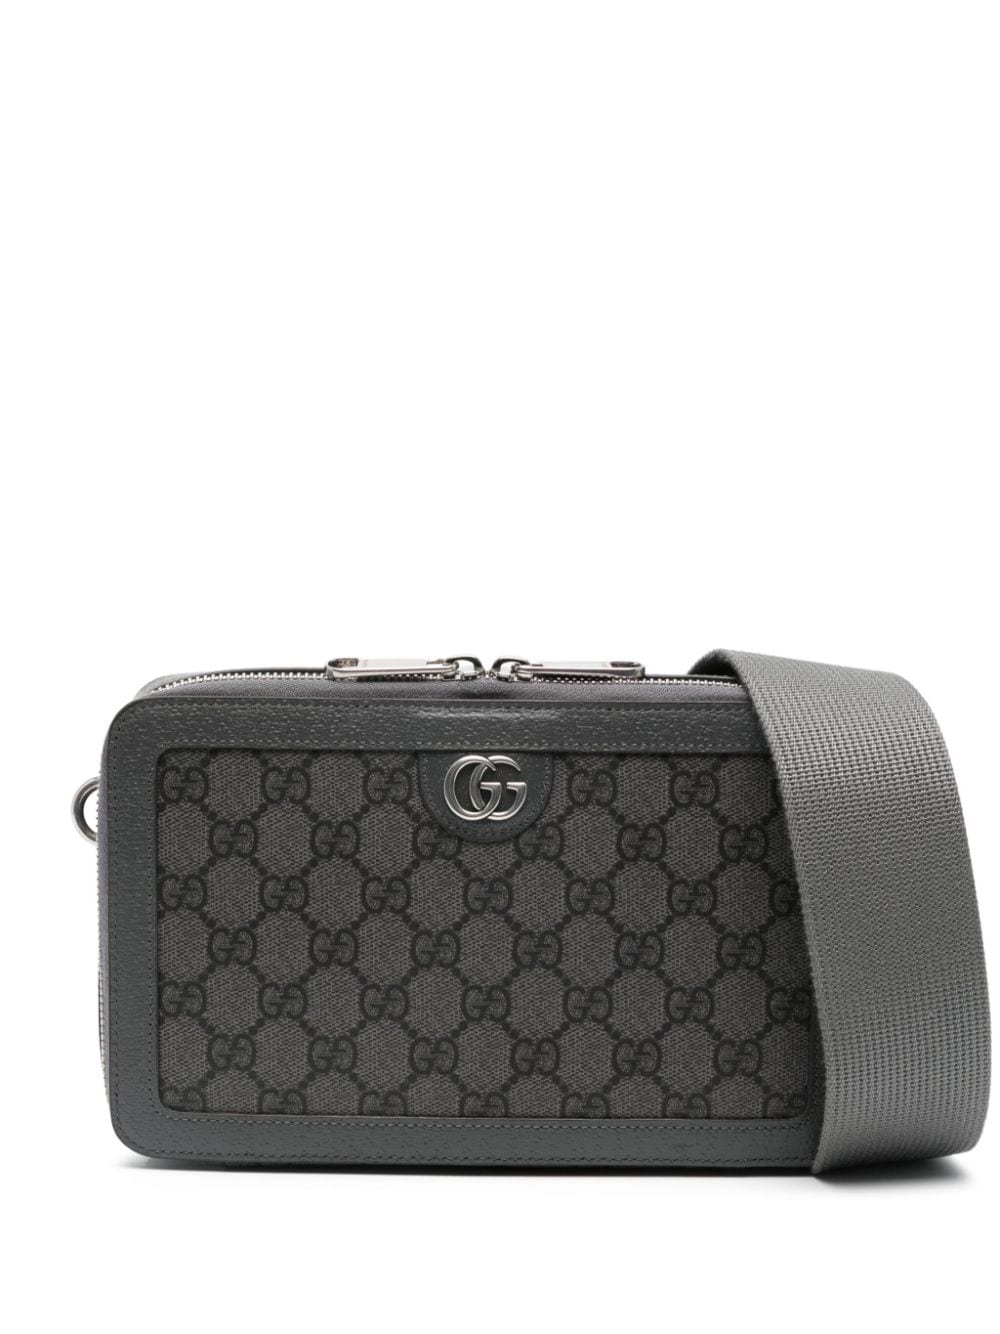 Gucci small Ophidia shoulder bag - Grey von Gucci